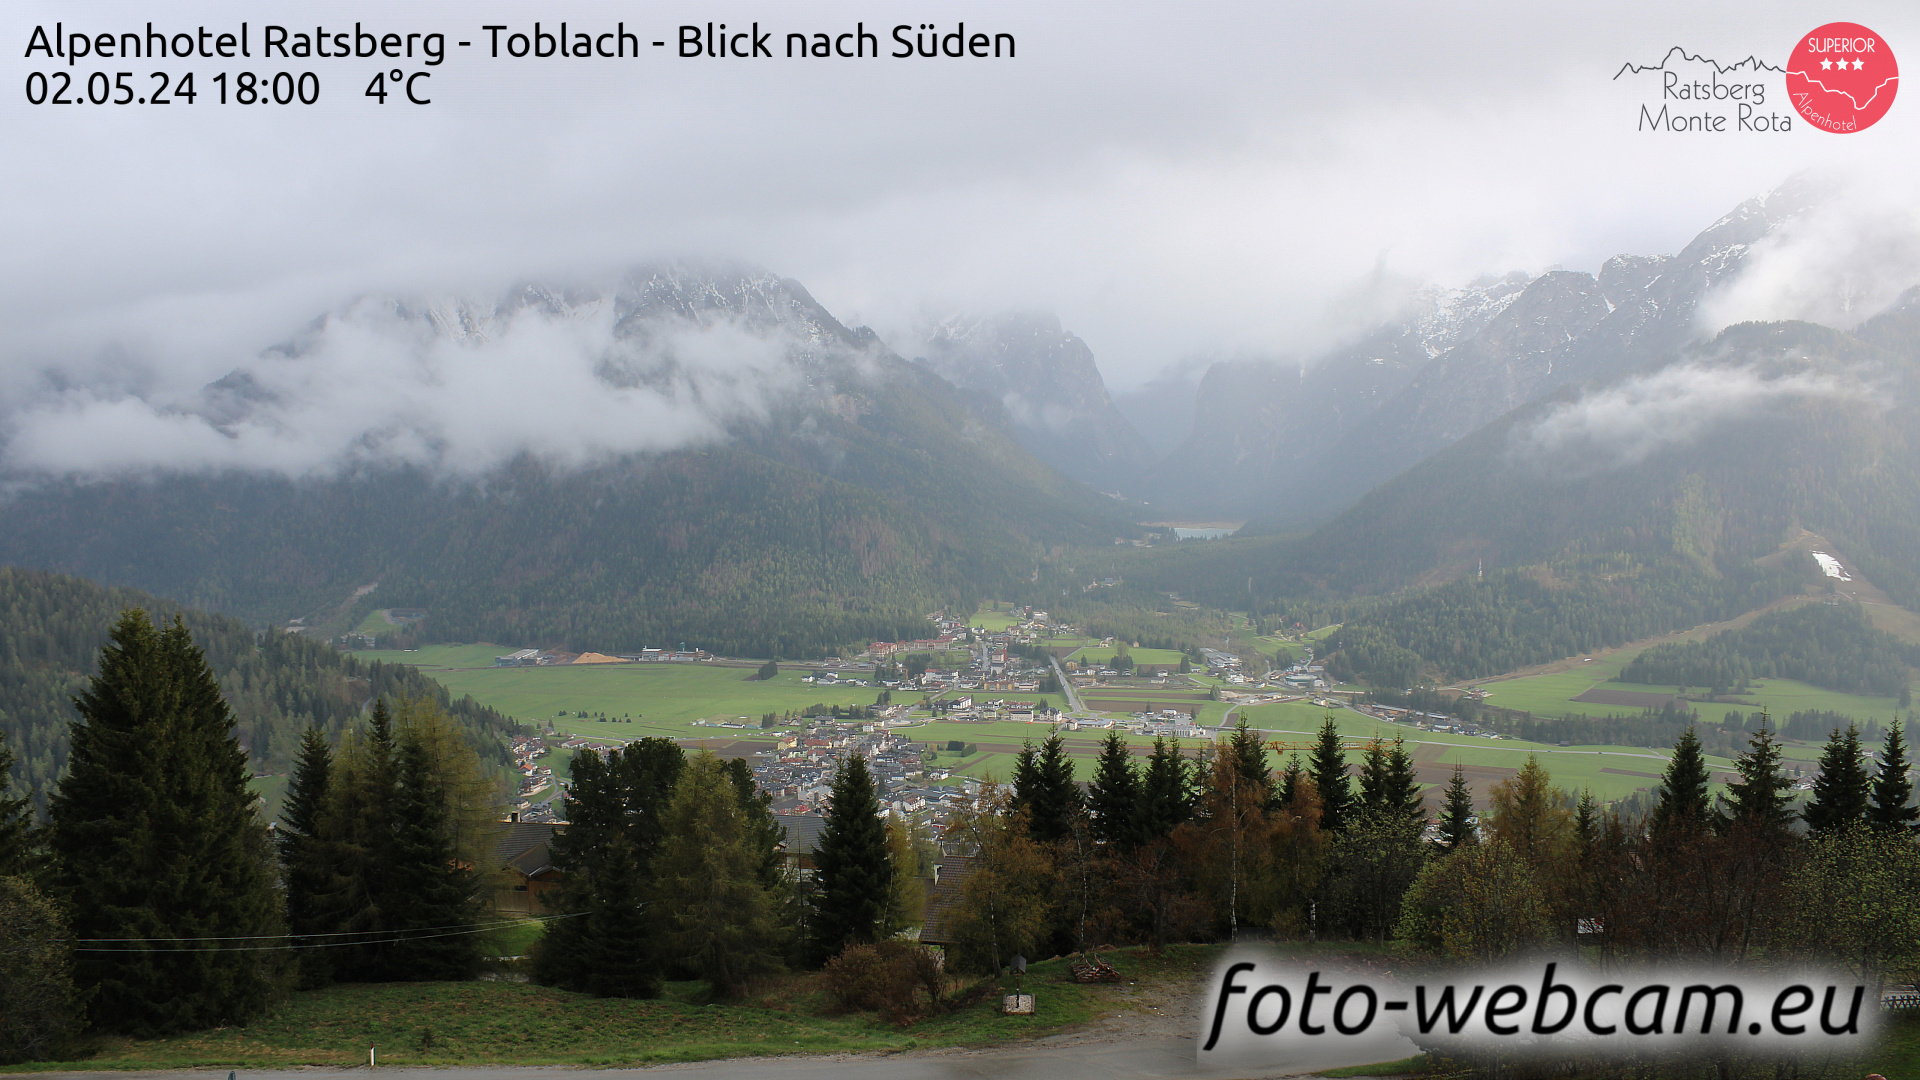 Toblach (Dolomiten) Fr. 18:04